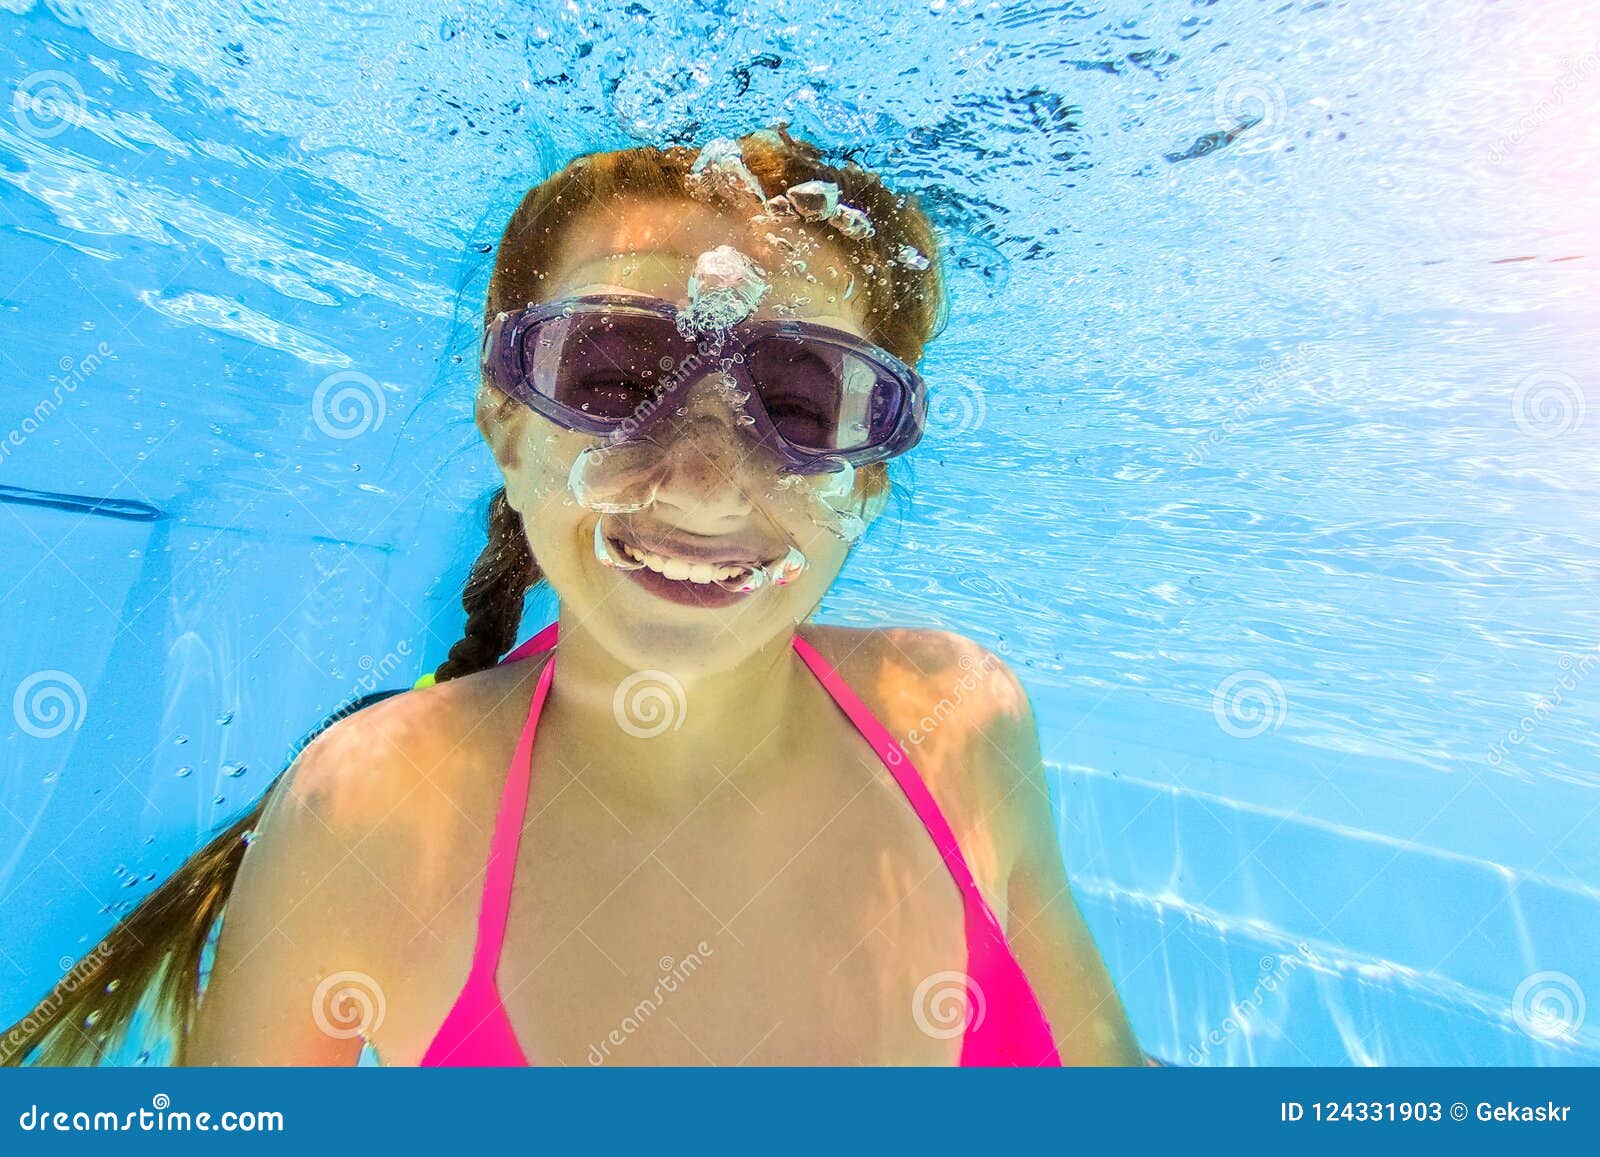 Smiling Girl Swimming Underwater in Pool Stock Image - Image of ...